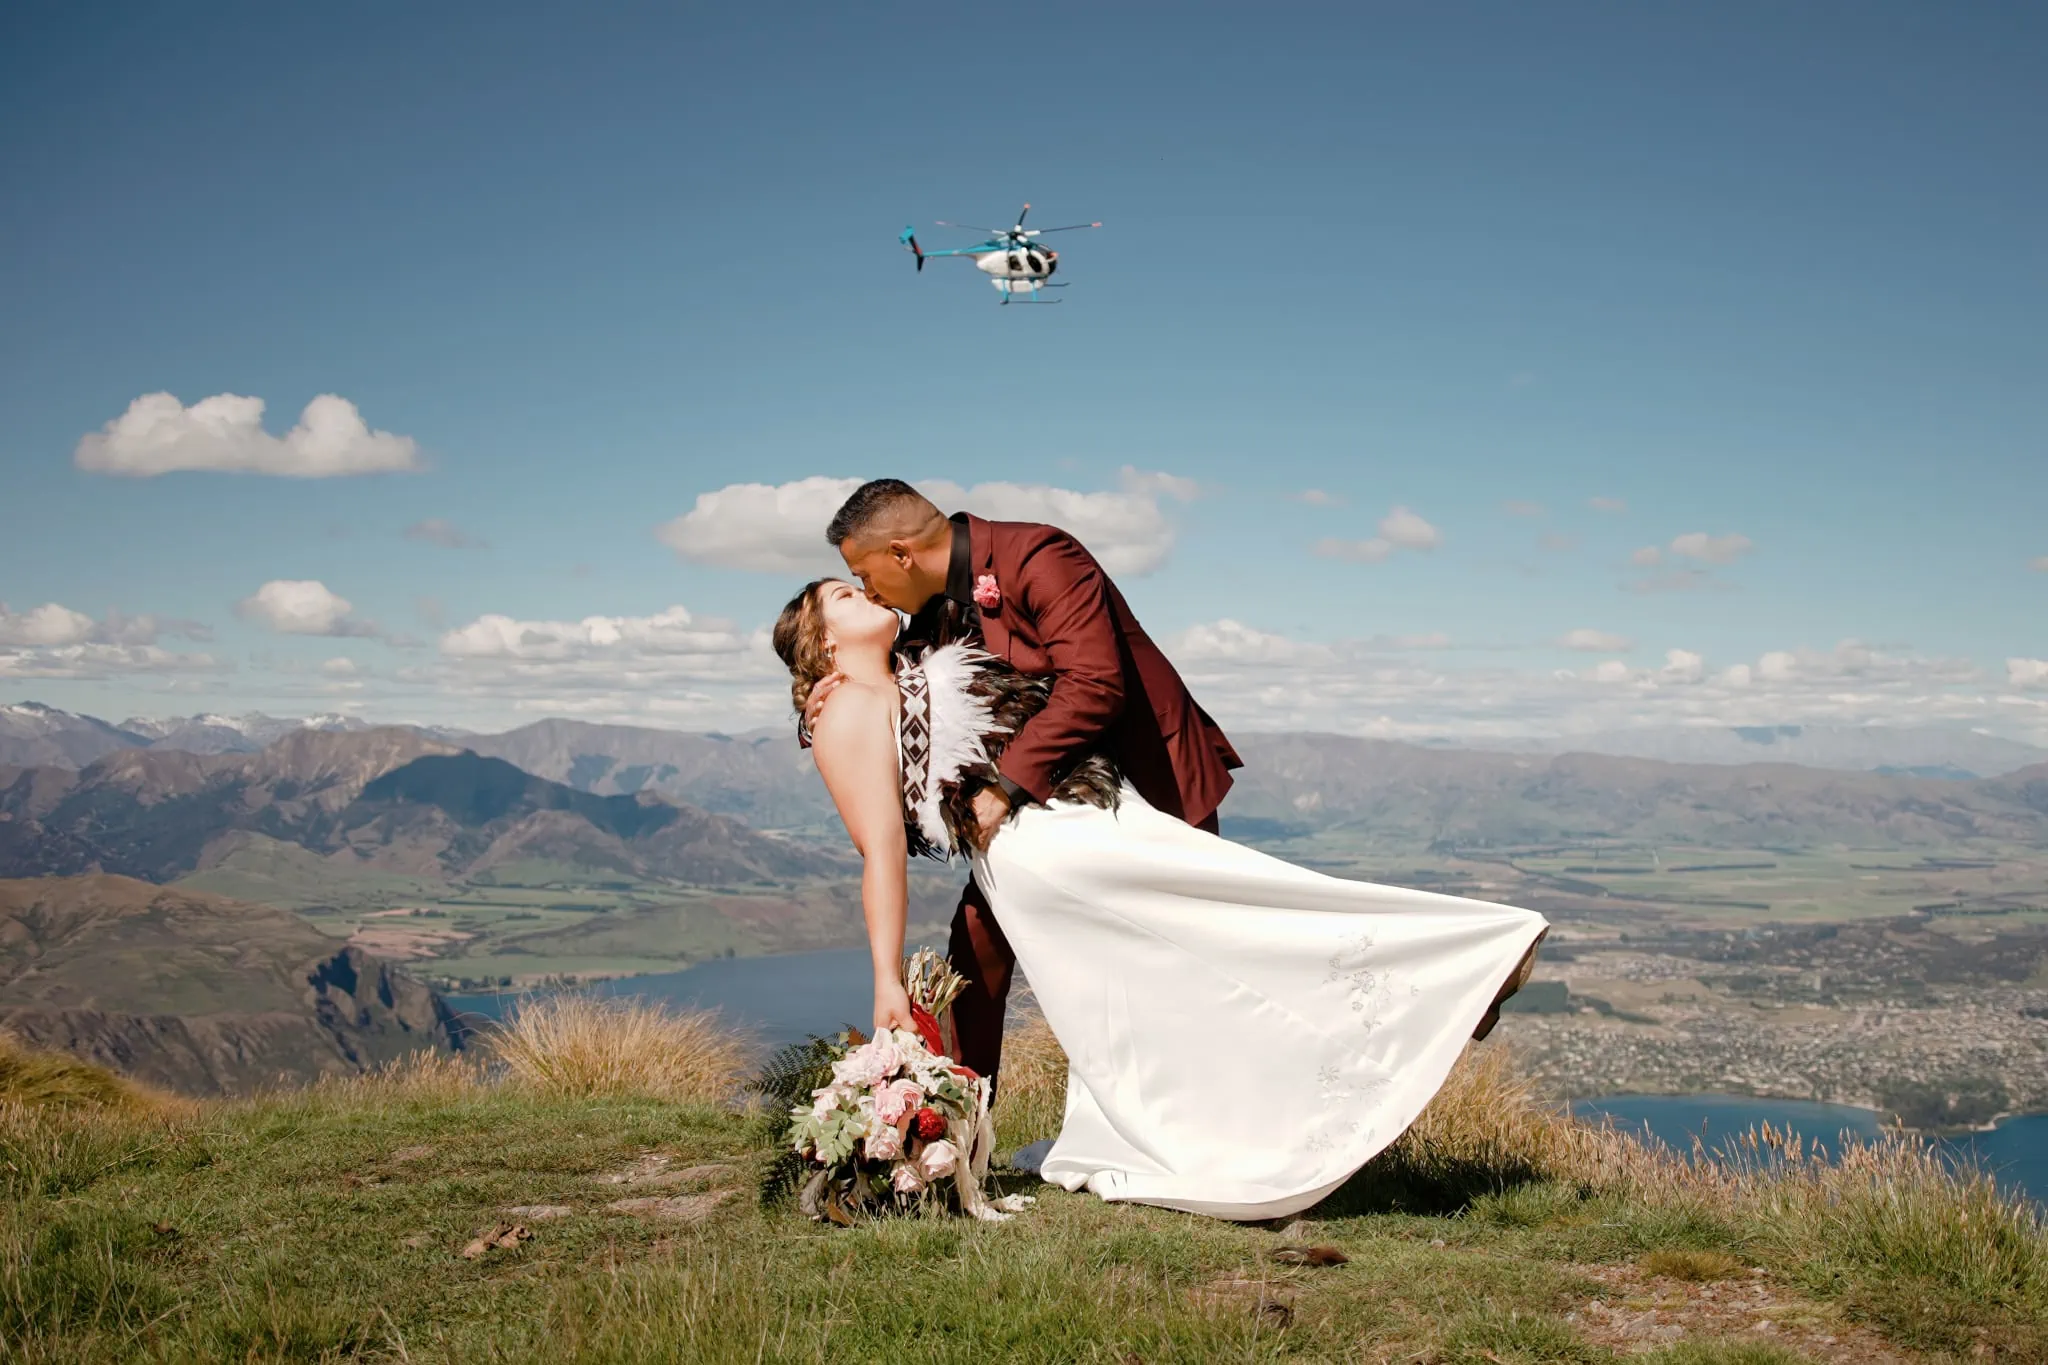 Queenstown New Zealand Elopement Wedding Photographer - Keywords: bride and groom, mountain, helicopter